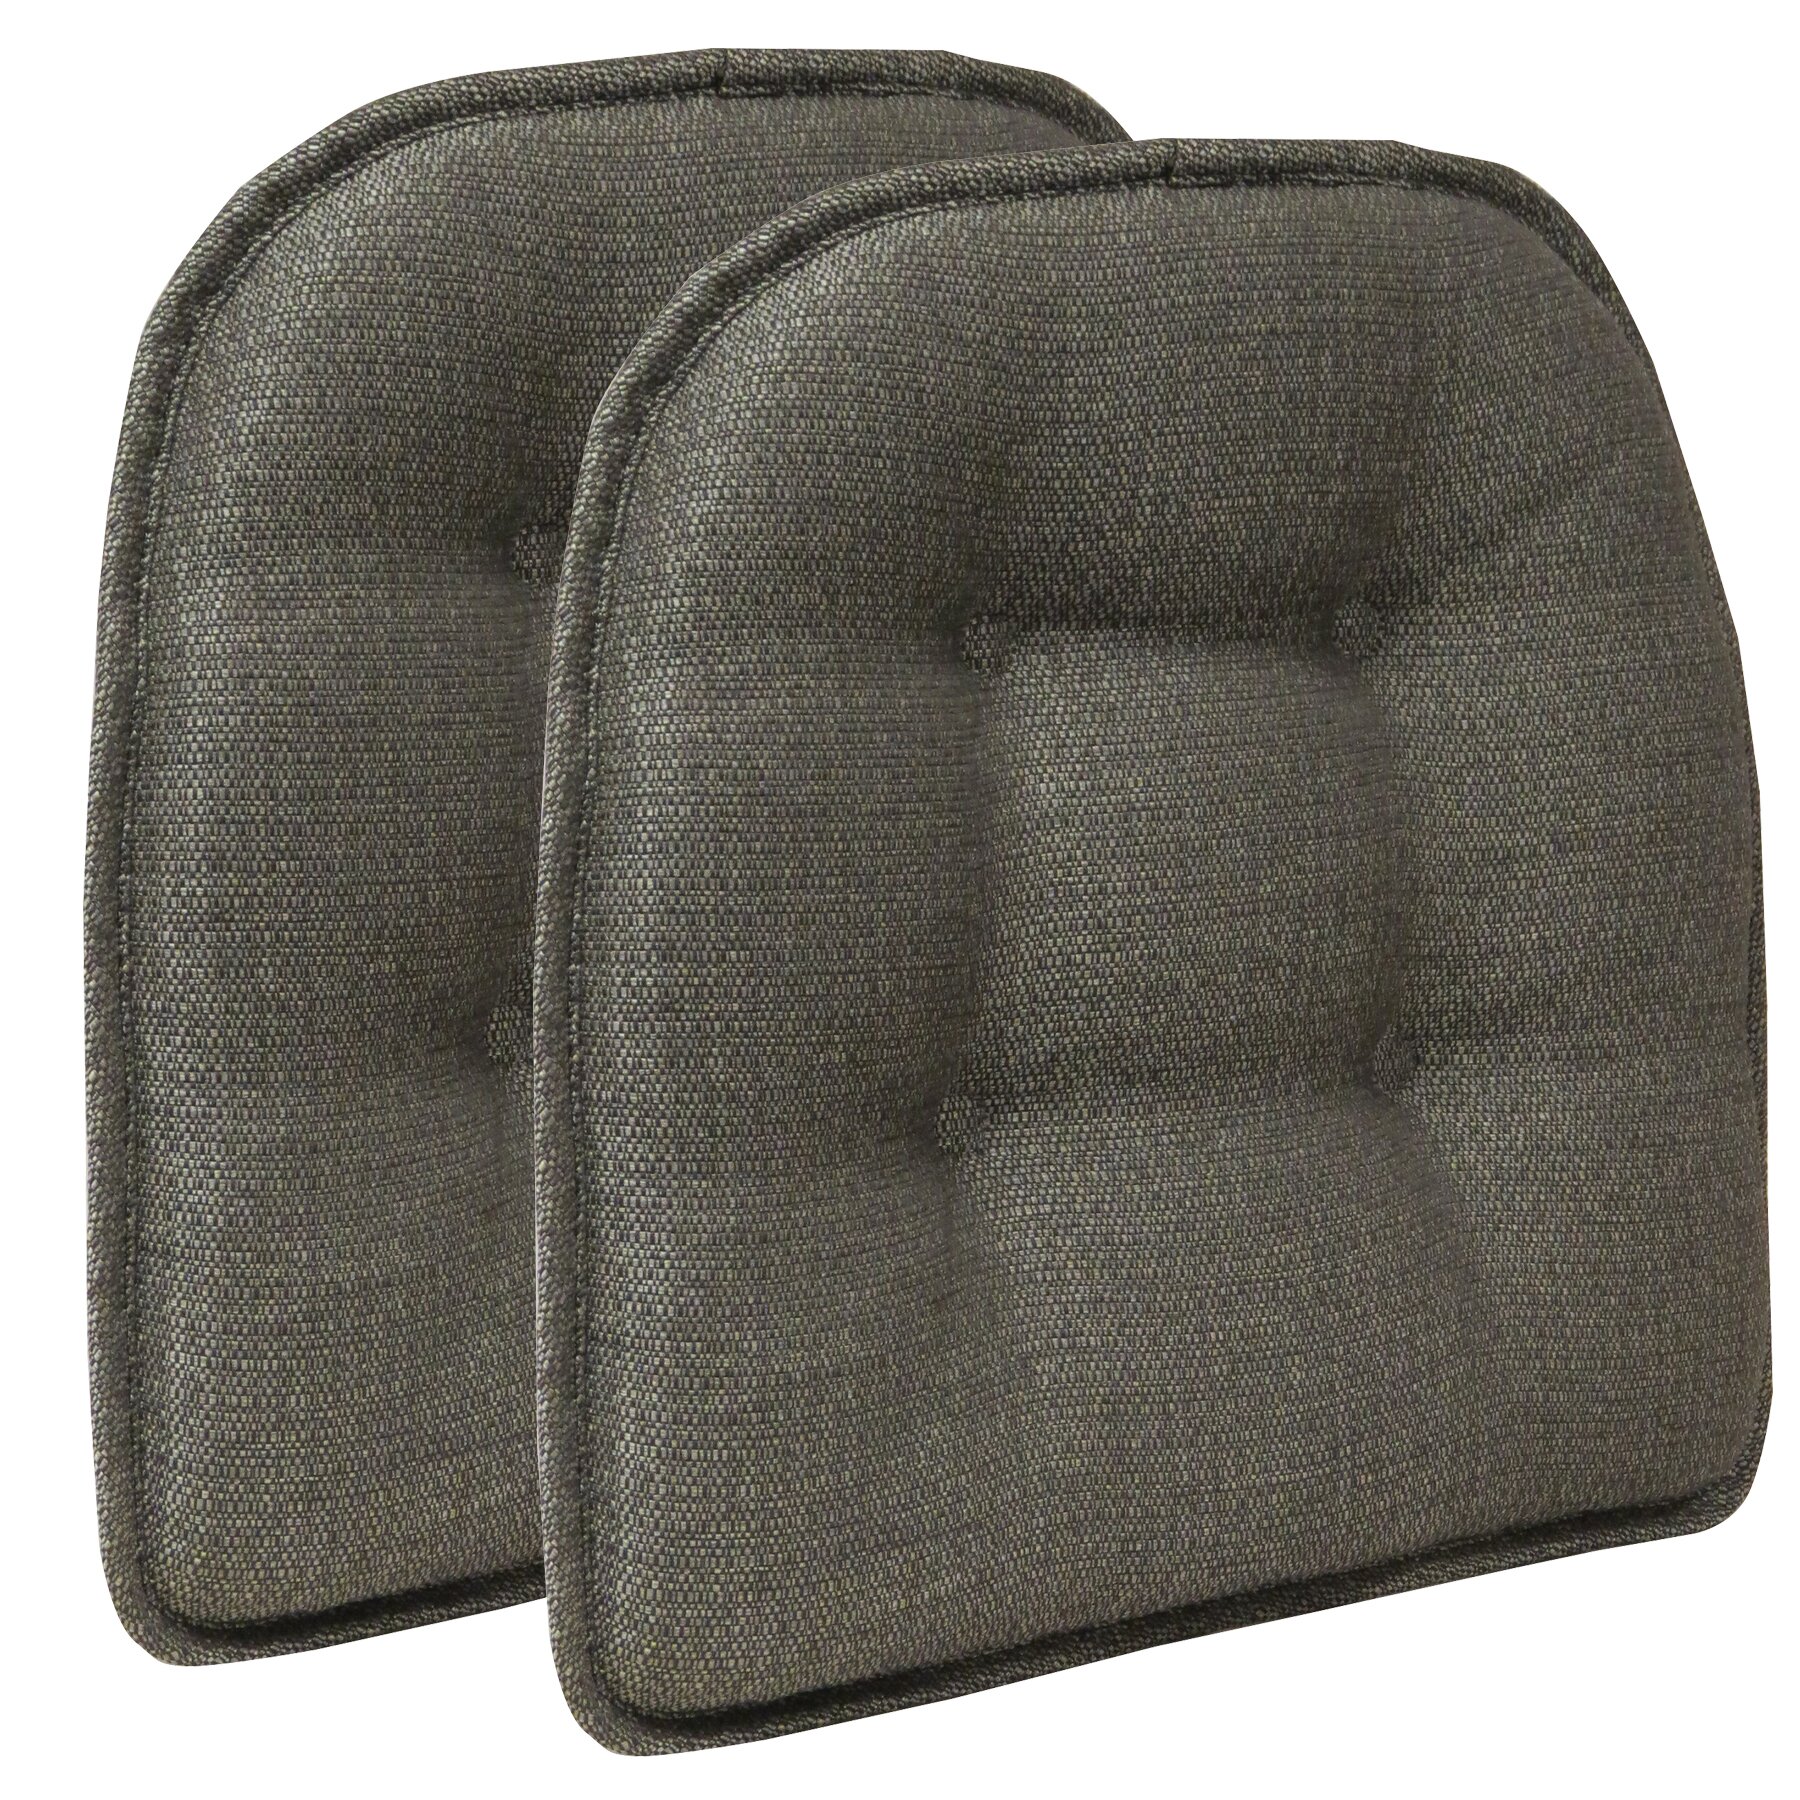 Wayfair Basics Wayfair Basics Tufted Gripper Chair Cushion Set ...